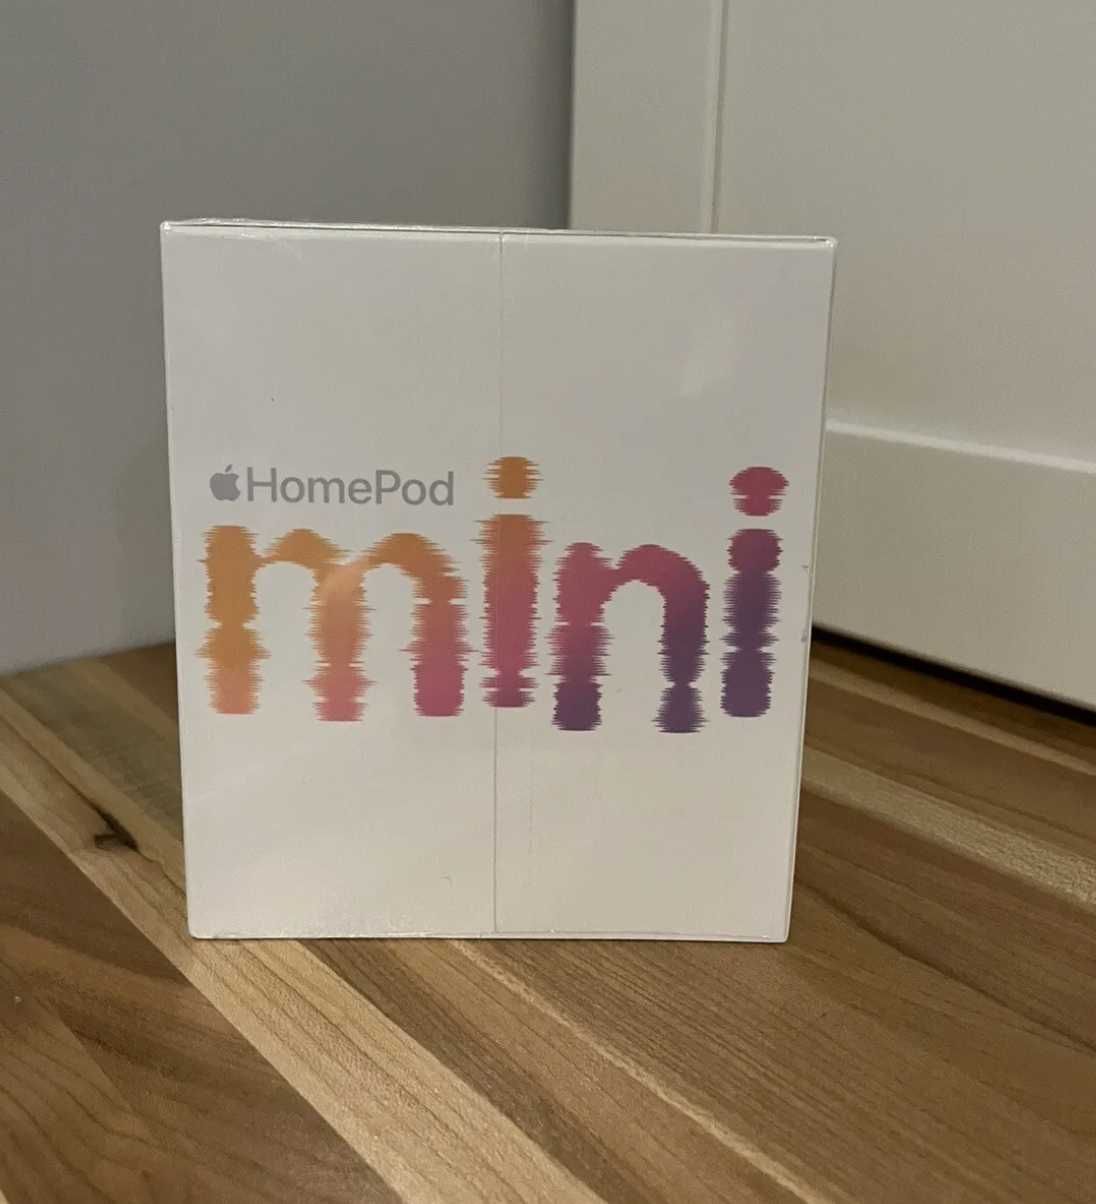 Smart колонка Apple HomePod mini White (MY5H2)